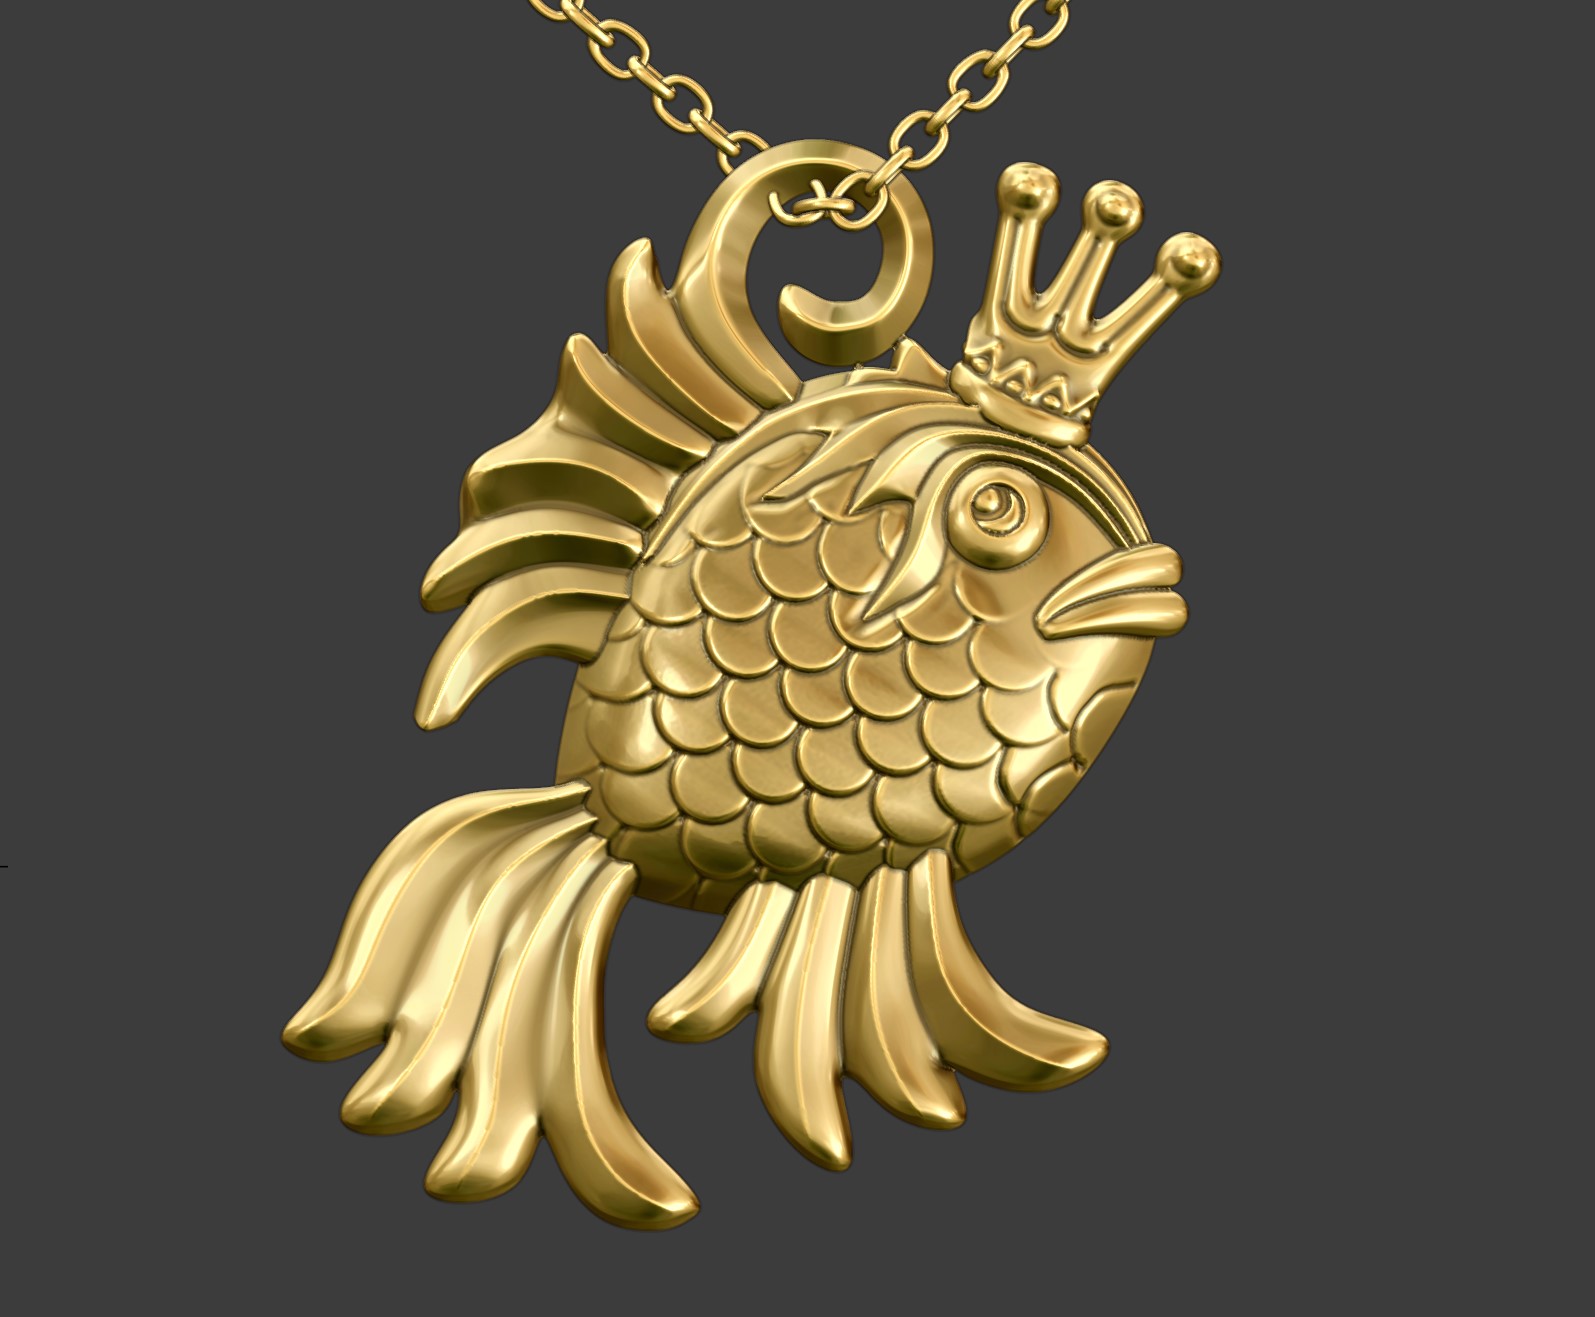 Goldfish pendant necklace brings luck